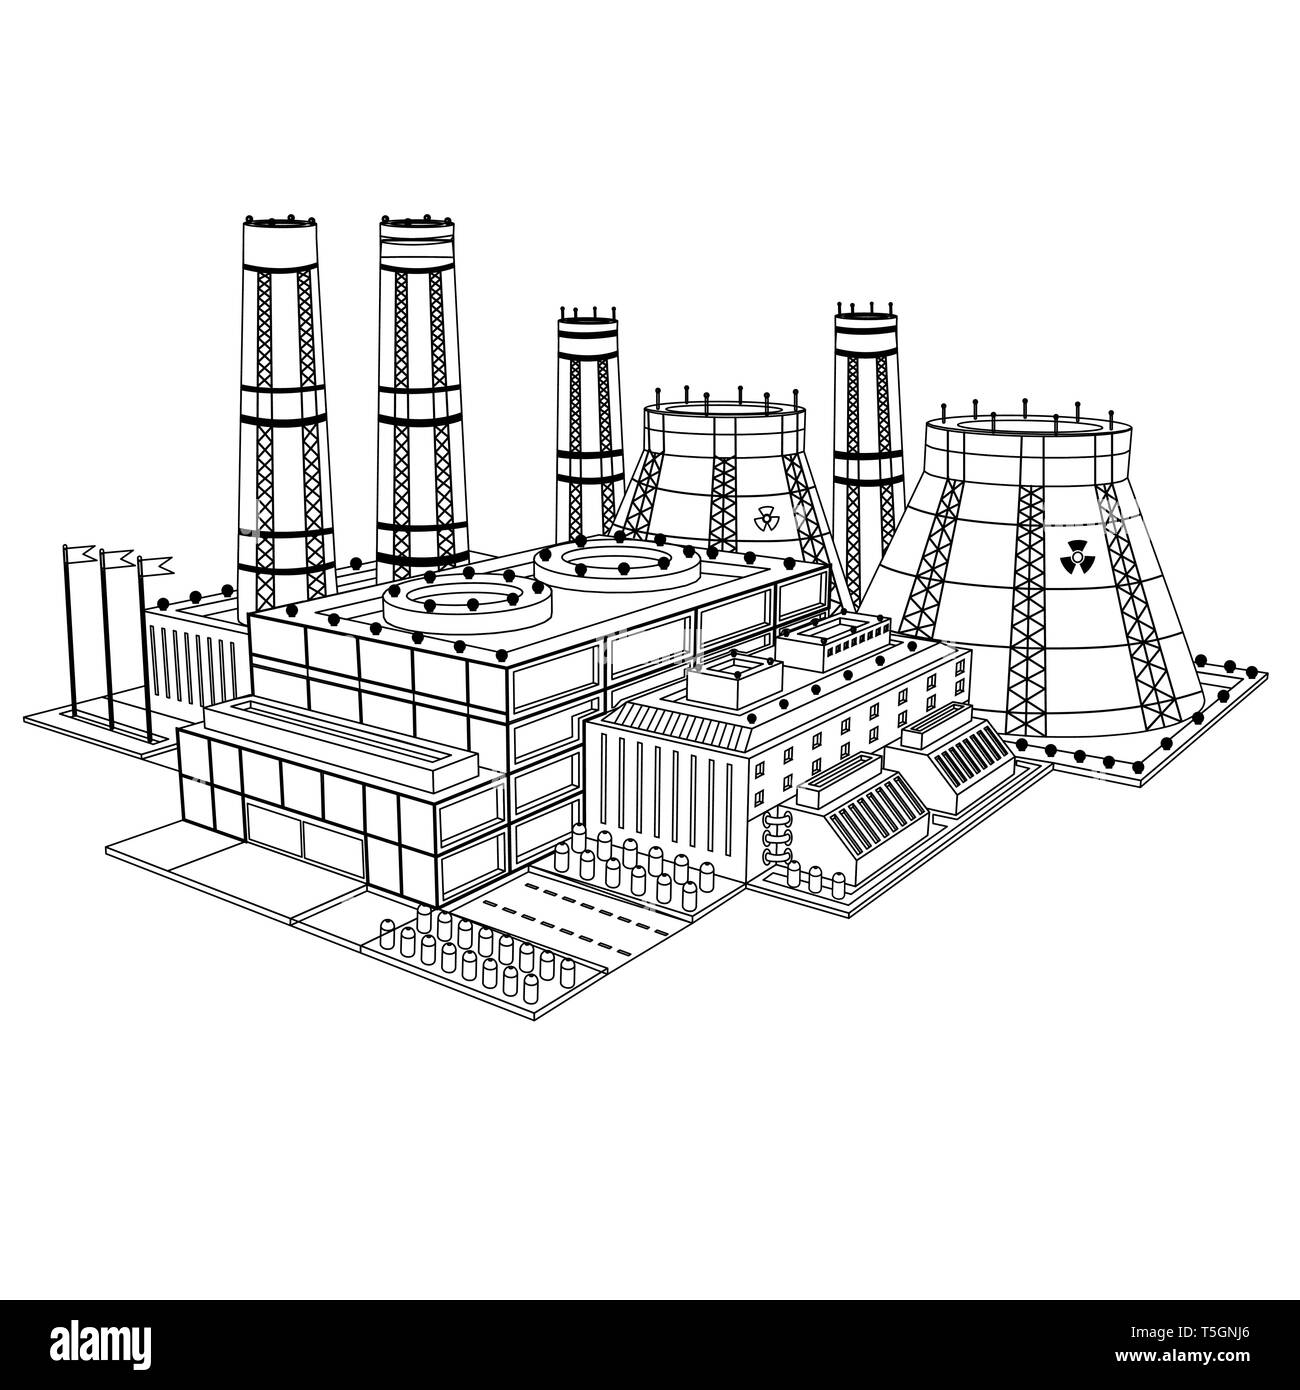 560 Nuclear Power Plant Diagram Images Stock Photos  Vectors   Shutterstock